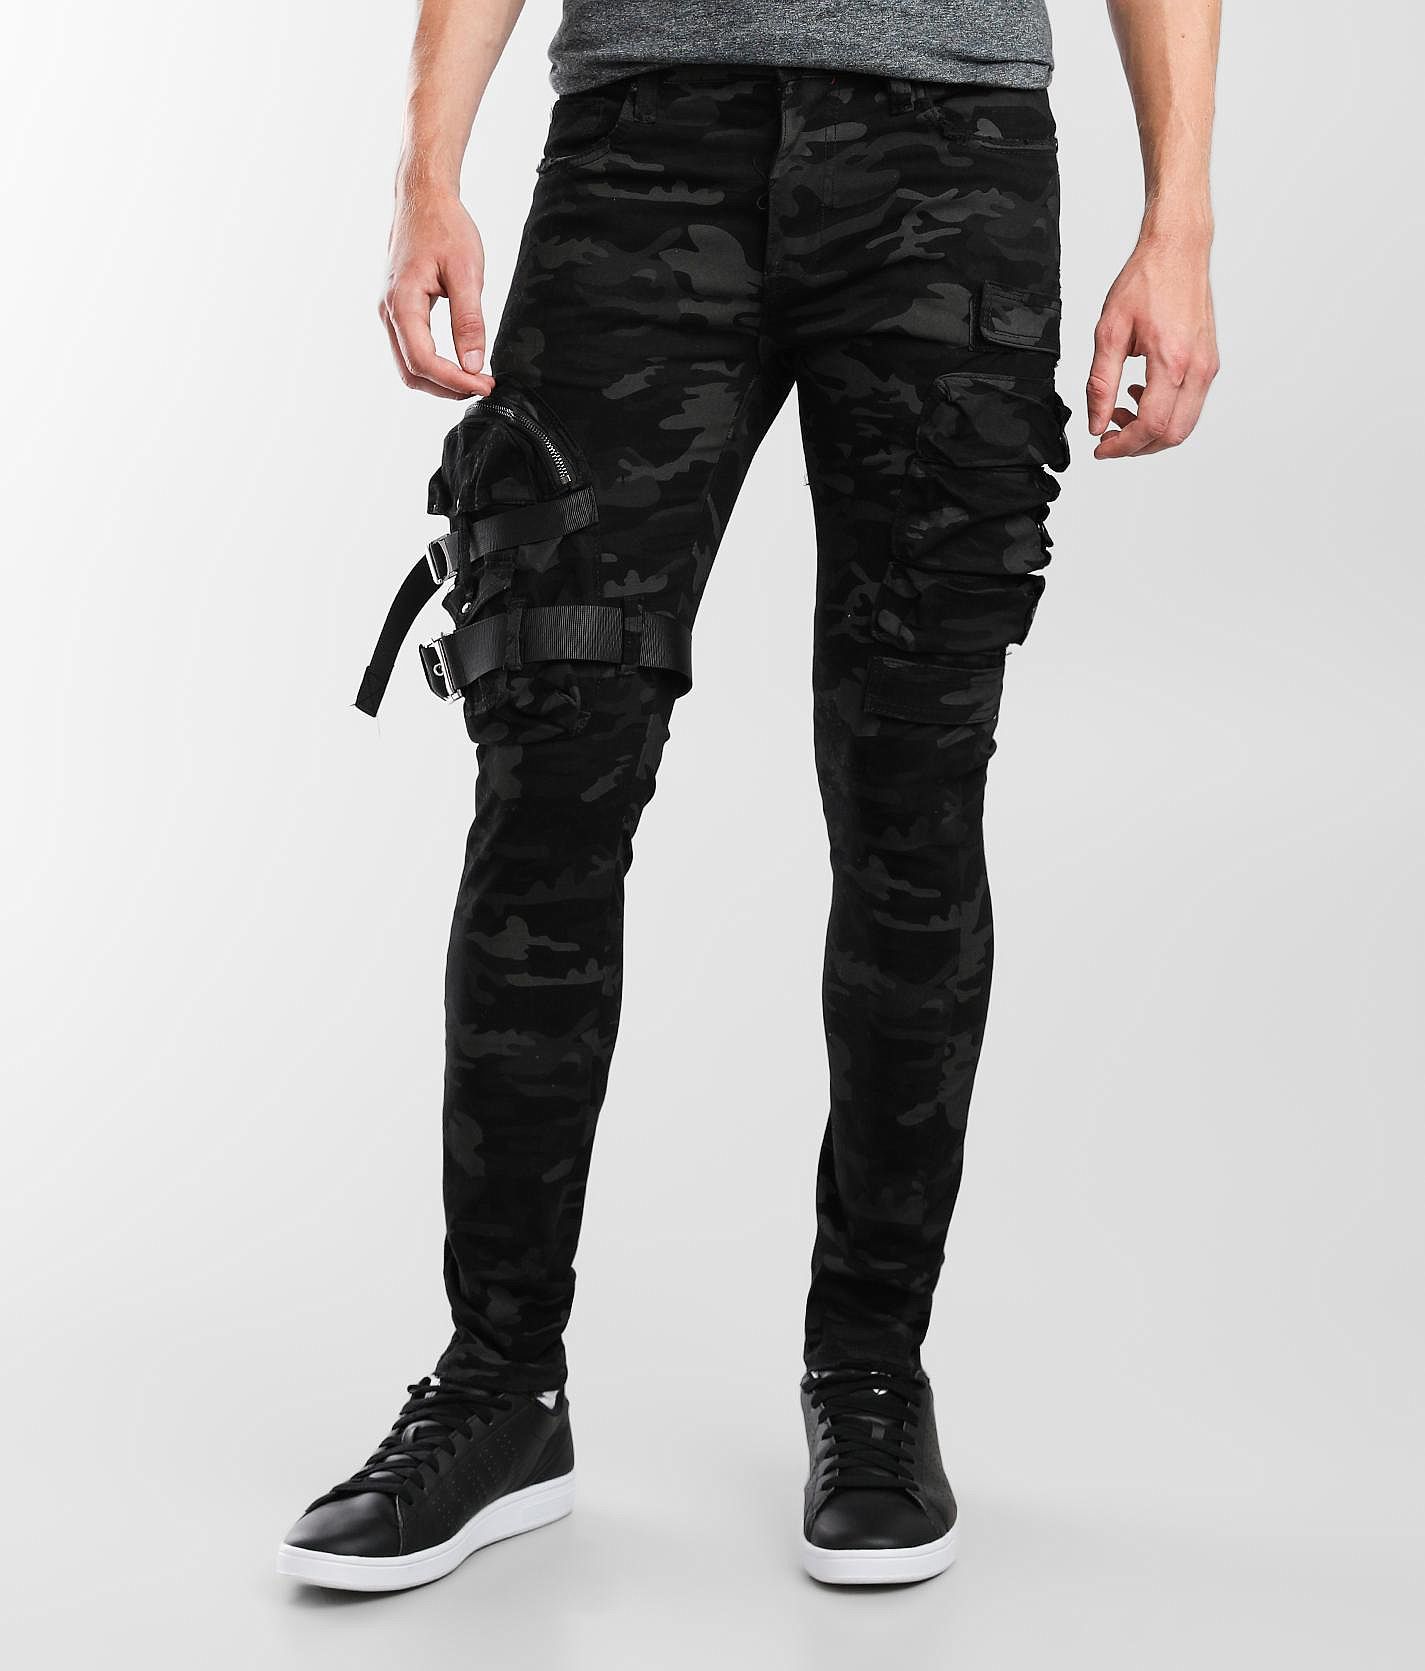 duim Overleg Mening Industrial Indigo Camo Cargo Skinny Stretch Jean - Men's Jeans in Black  Camo | Buckle